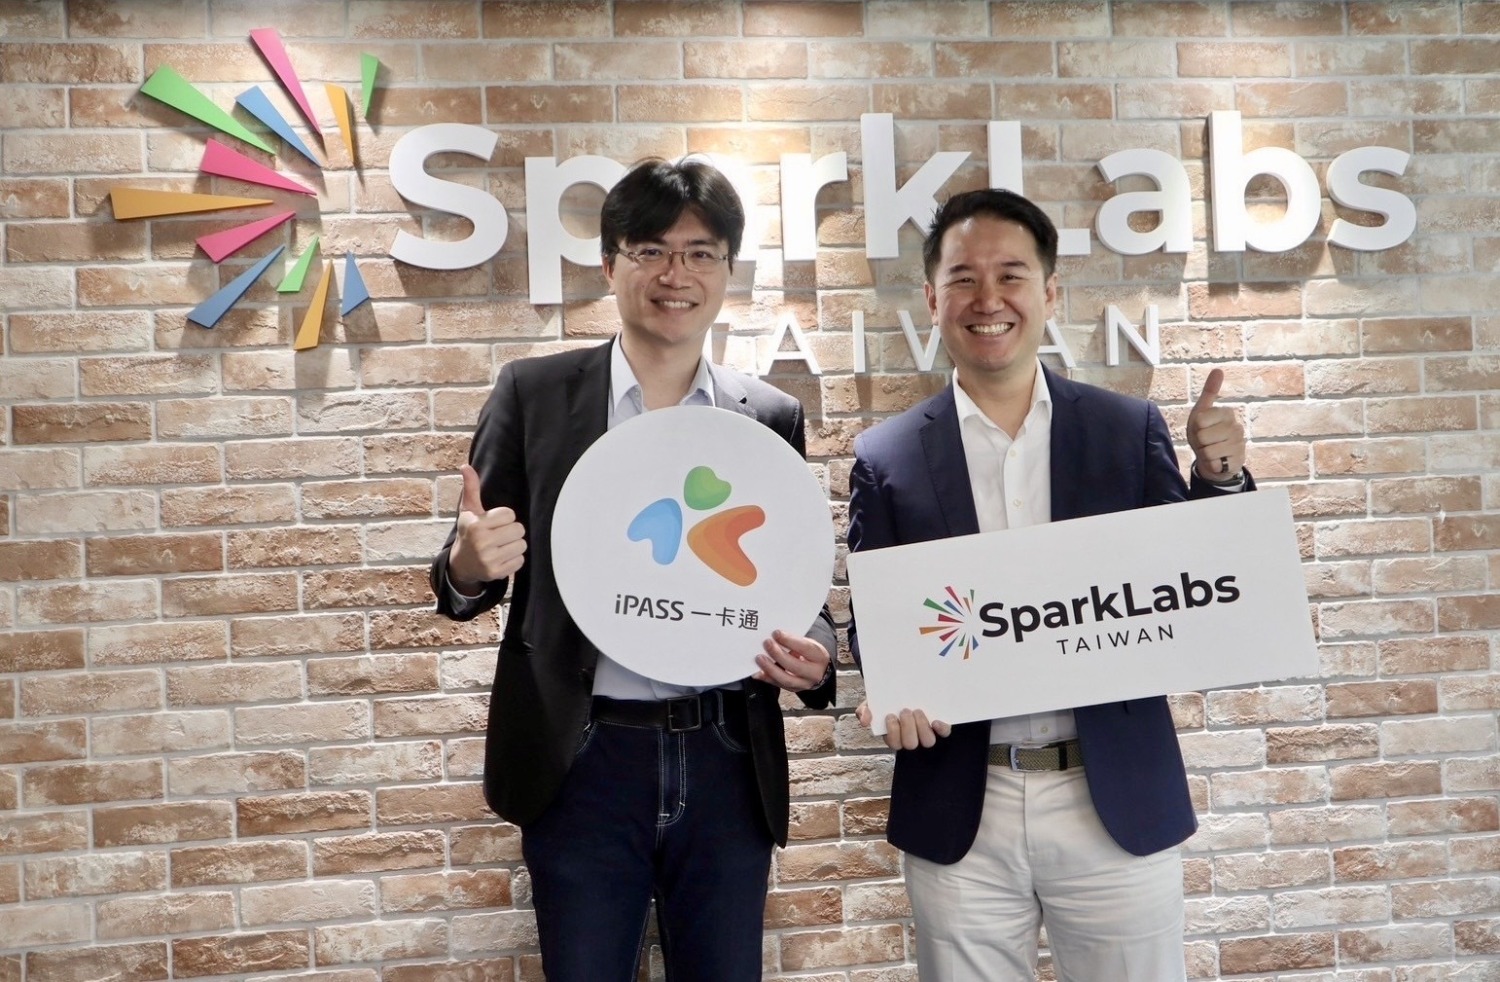 iPASS一卡通與SparkLabs Taiwan聯手，共創金融科技新里程碑！